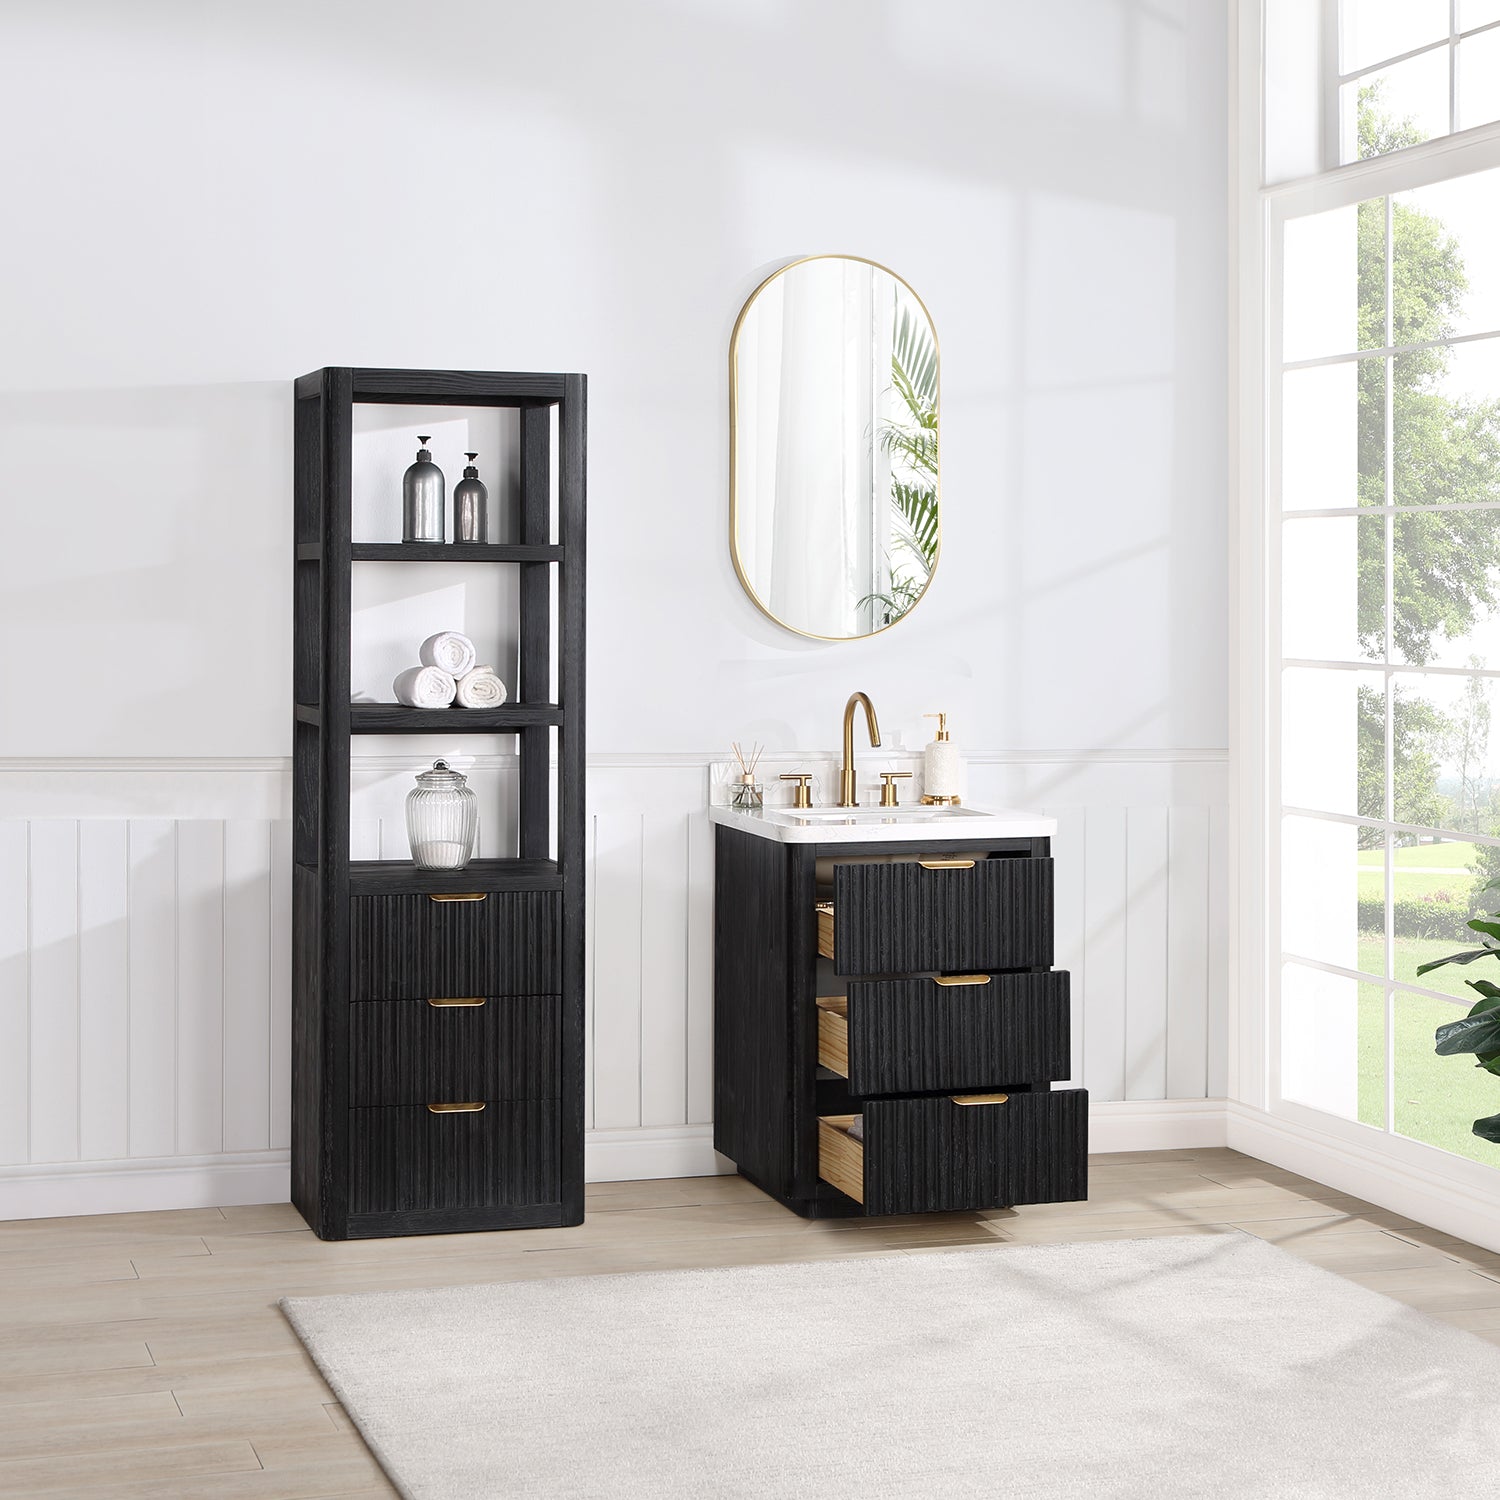 Cádiz 24in. Free-standing Single Bathroom Vanity in Fir Wood Black with Composite top in Lightning White